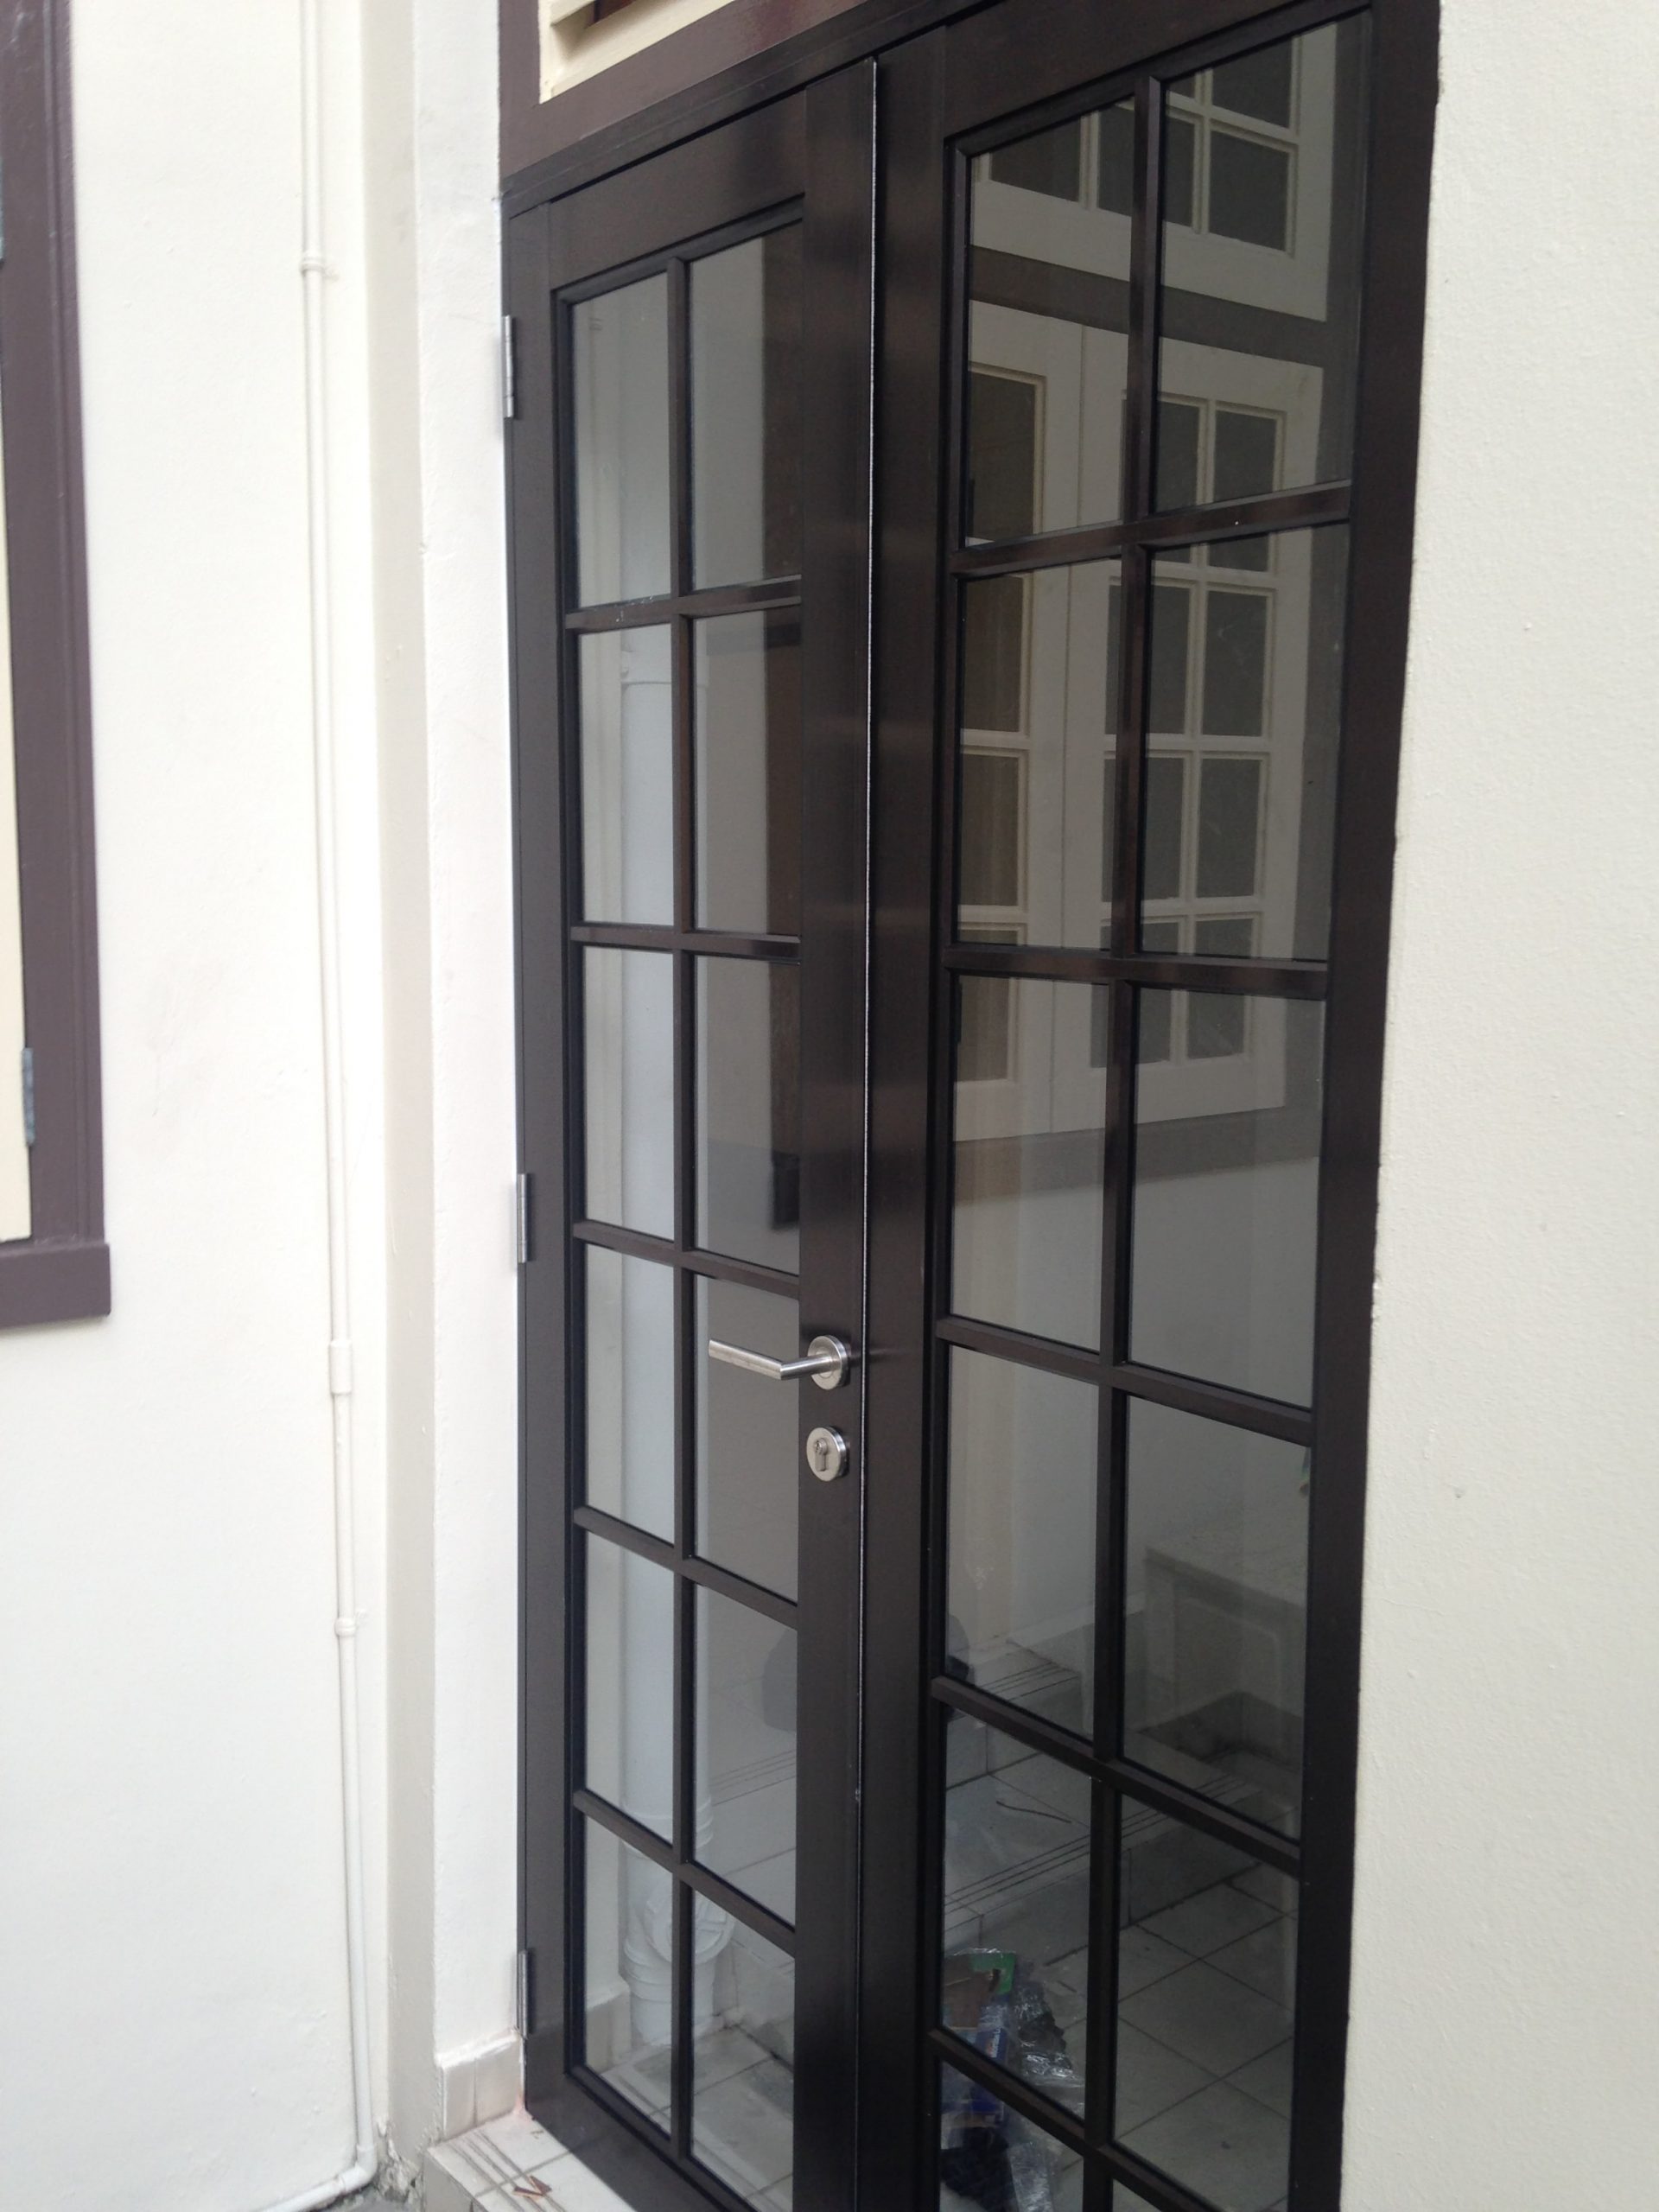 2 Panels Glass Swing Gate With Lattice Design Design